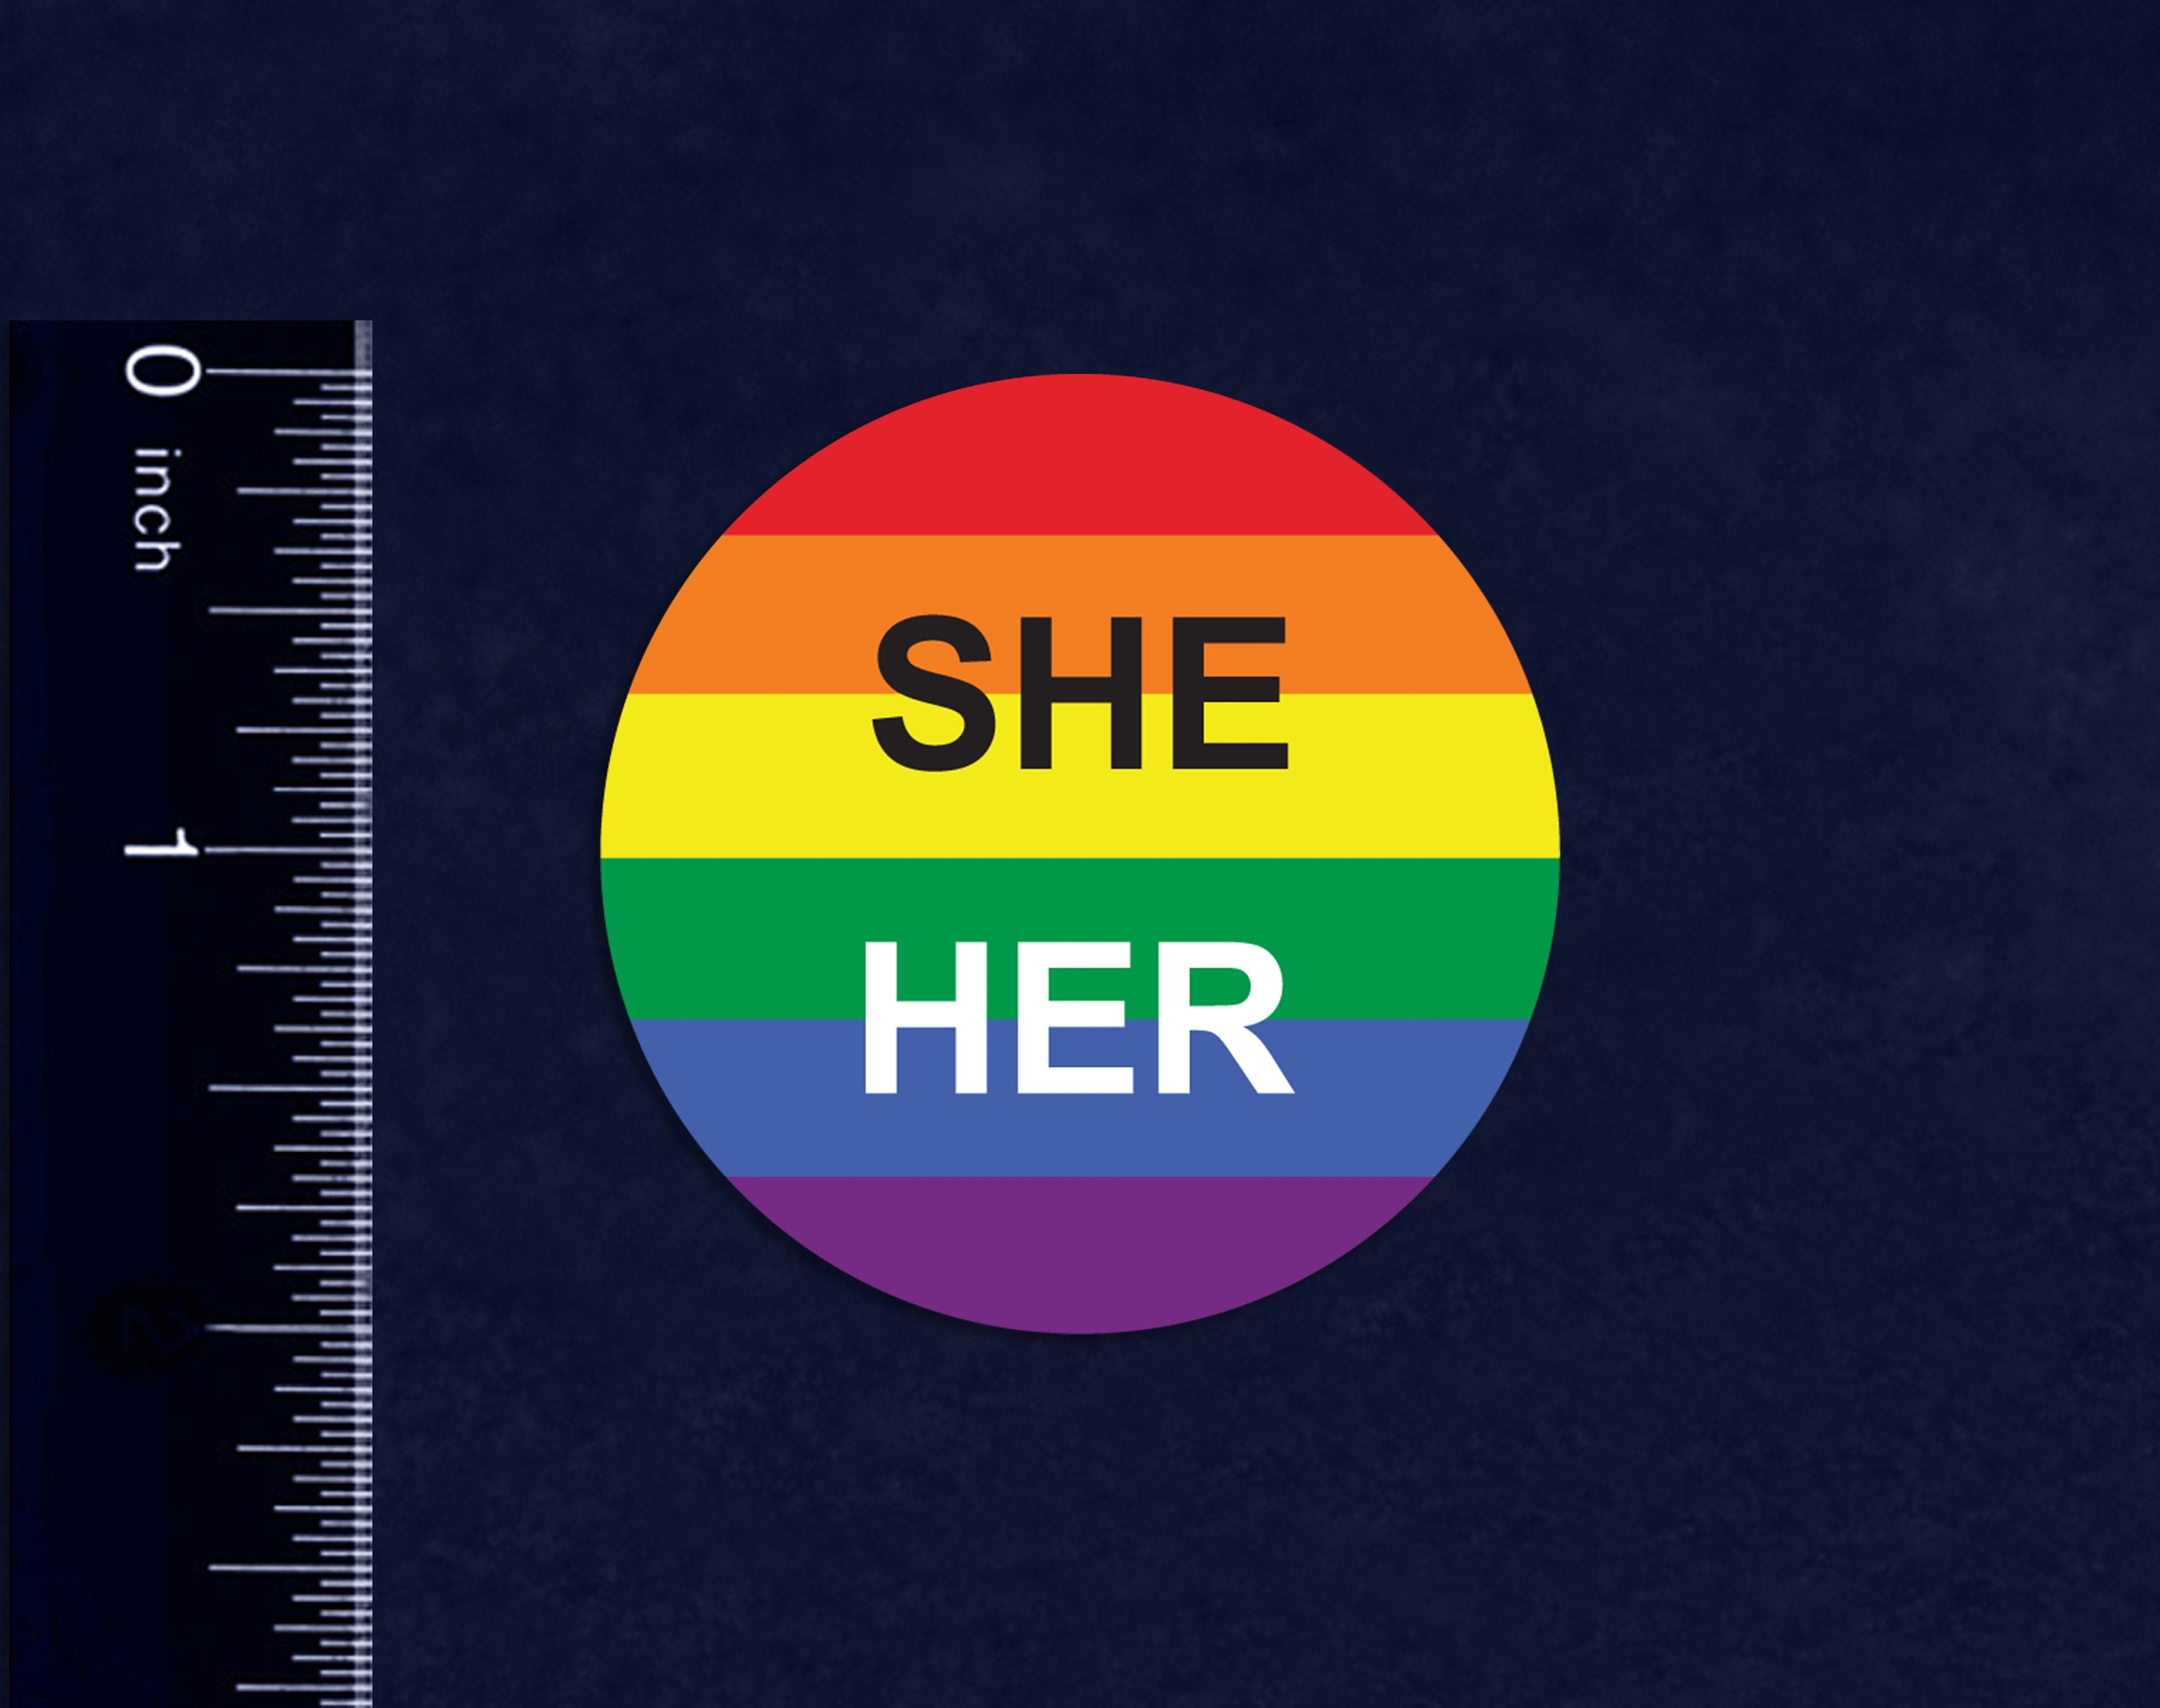 She Her Pronoun Rainbow Stickers for Gay Pride, LGBTQ Rainbow Flag